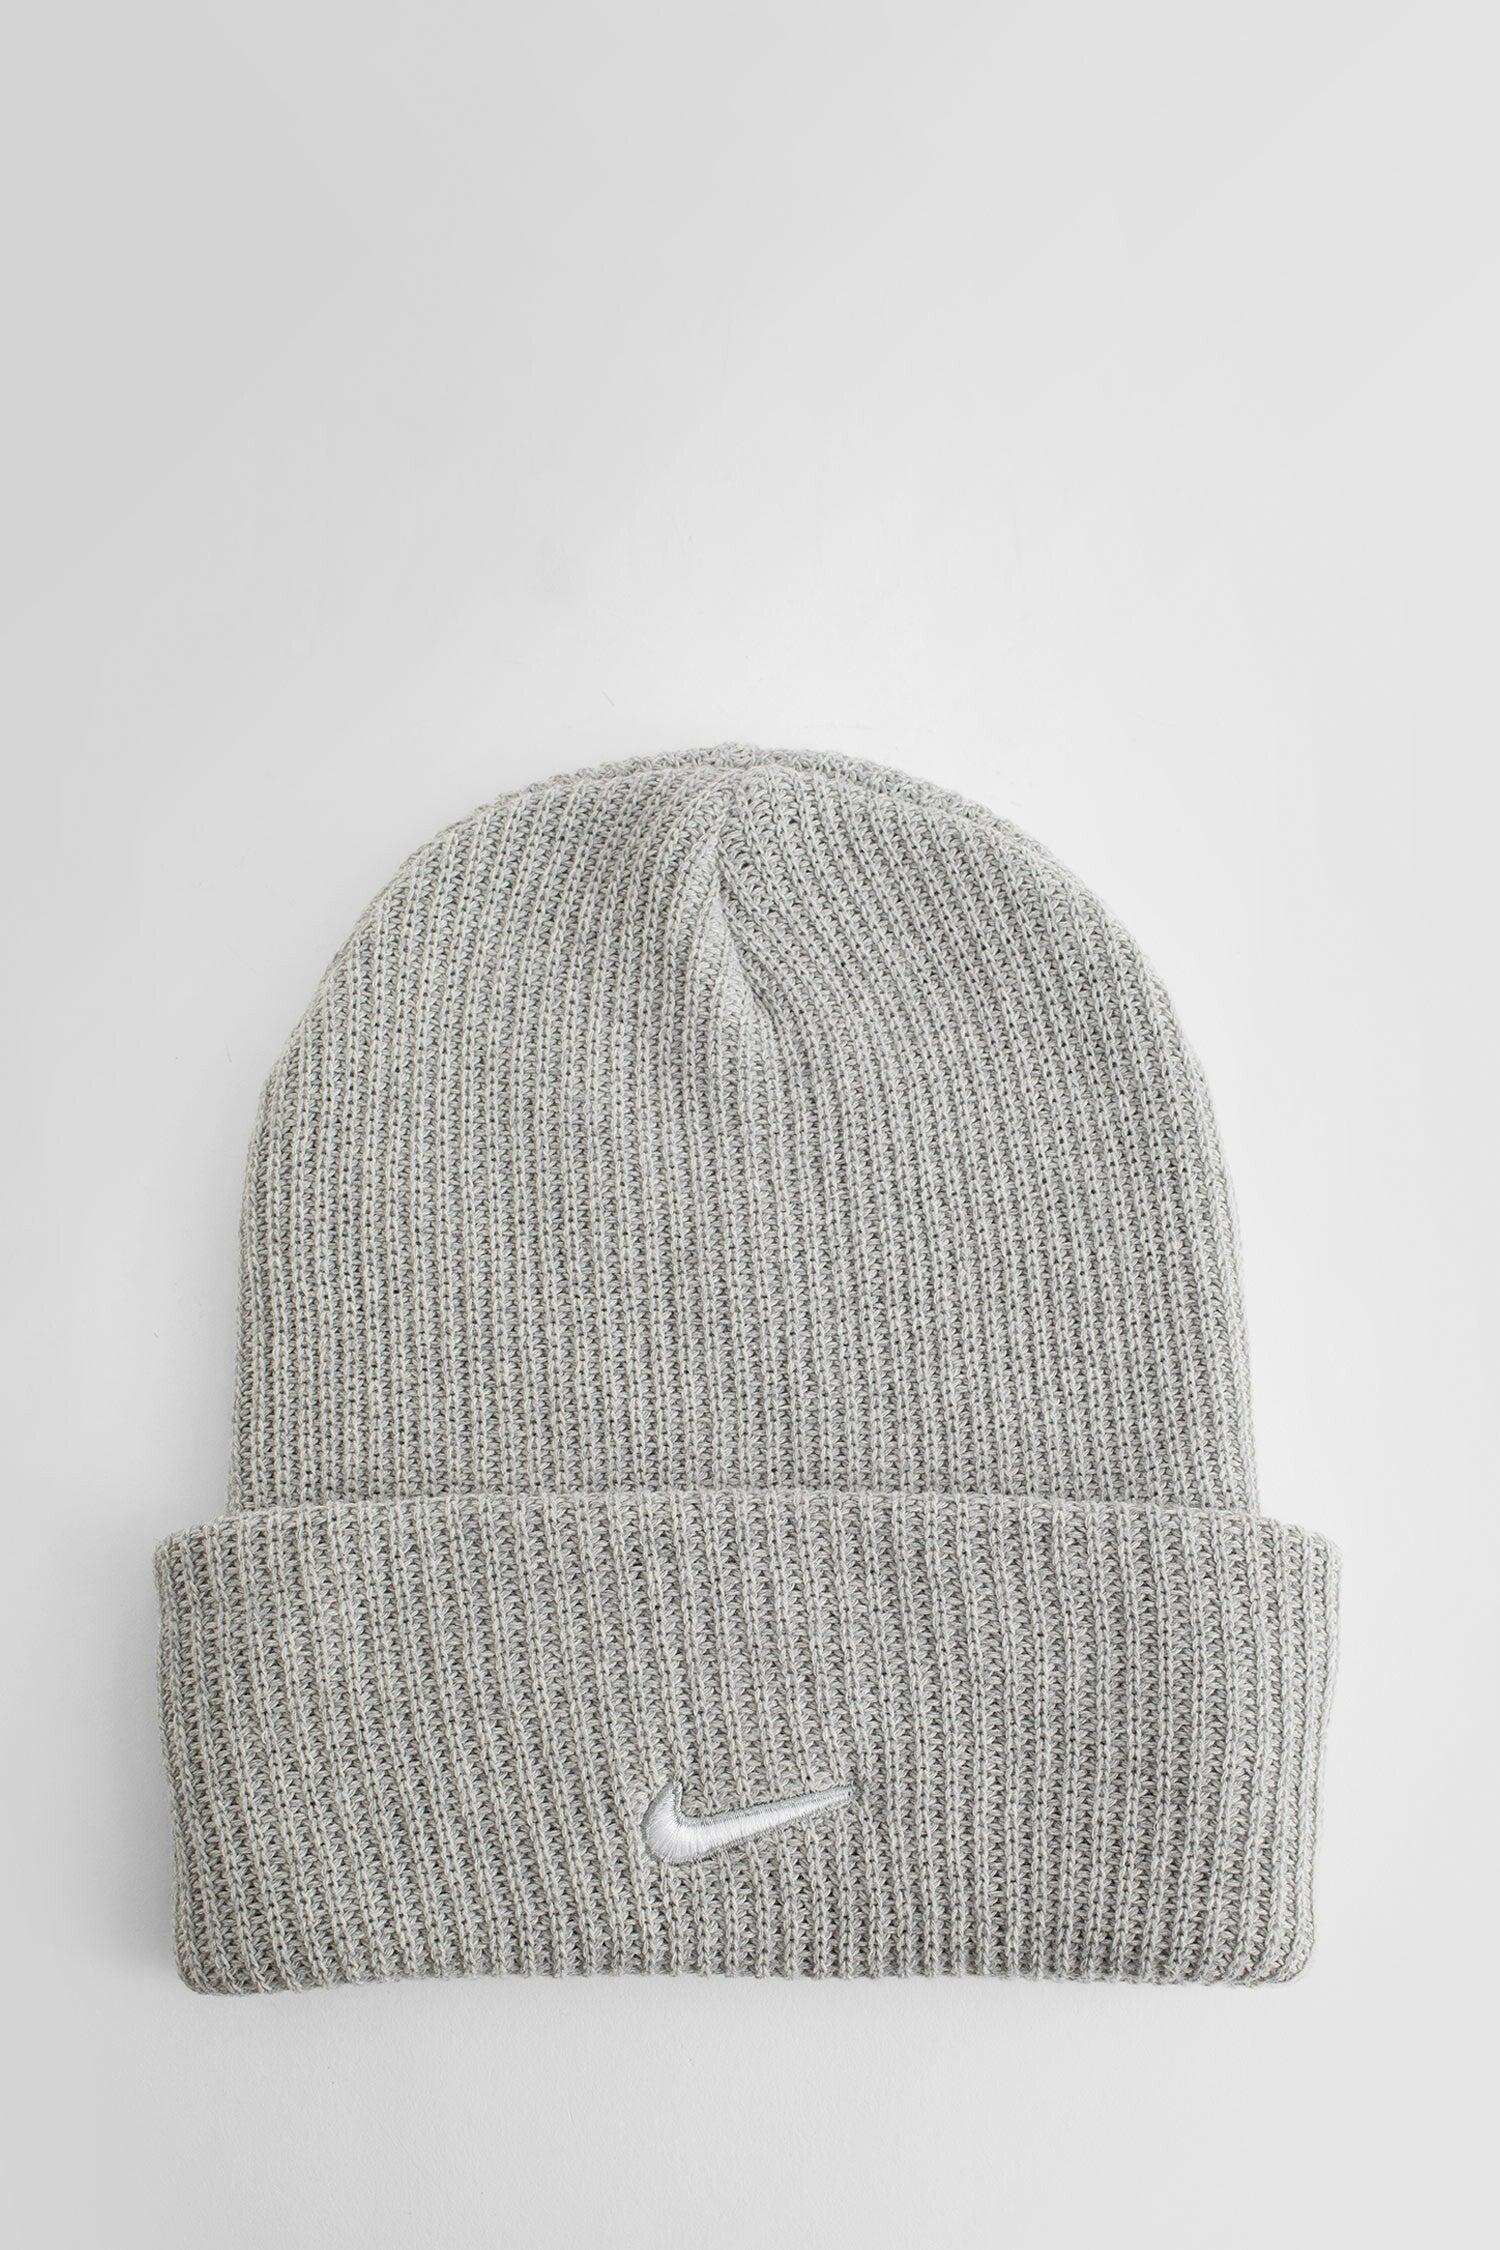 Nike Hats in Gray for Men | Lyst